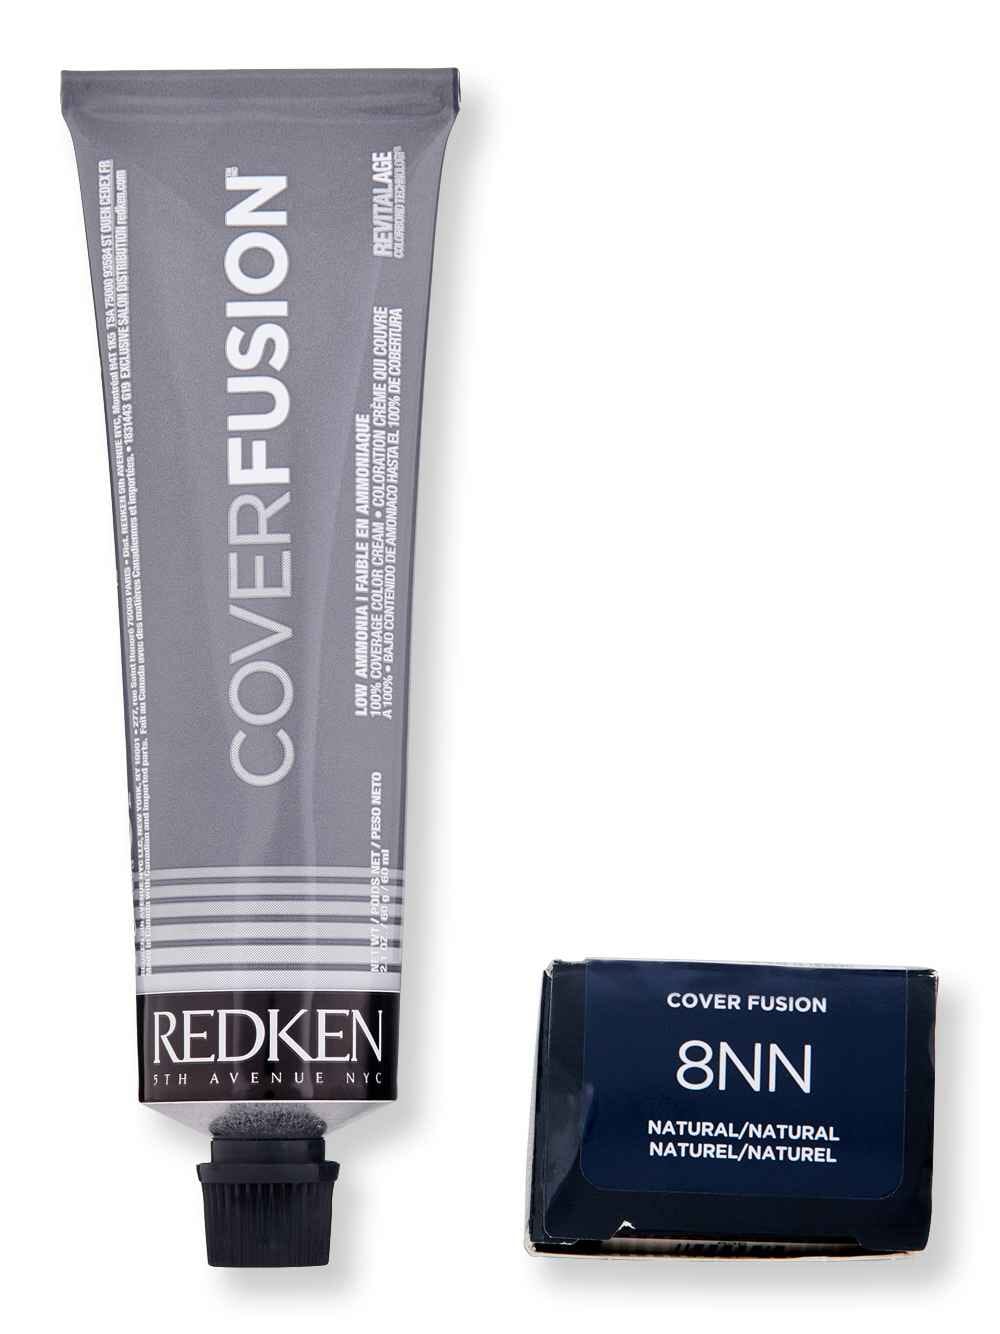 Redken Redken Cover Fusion 8NN Natural Natural Hair Color 